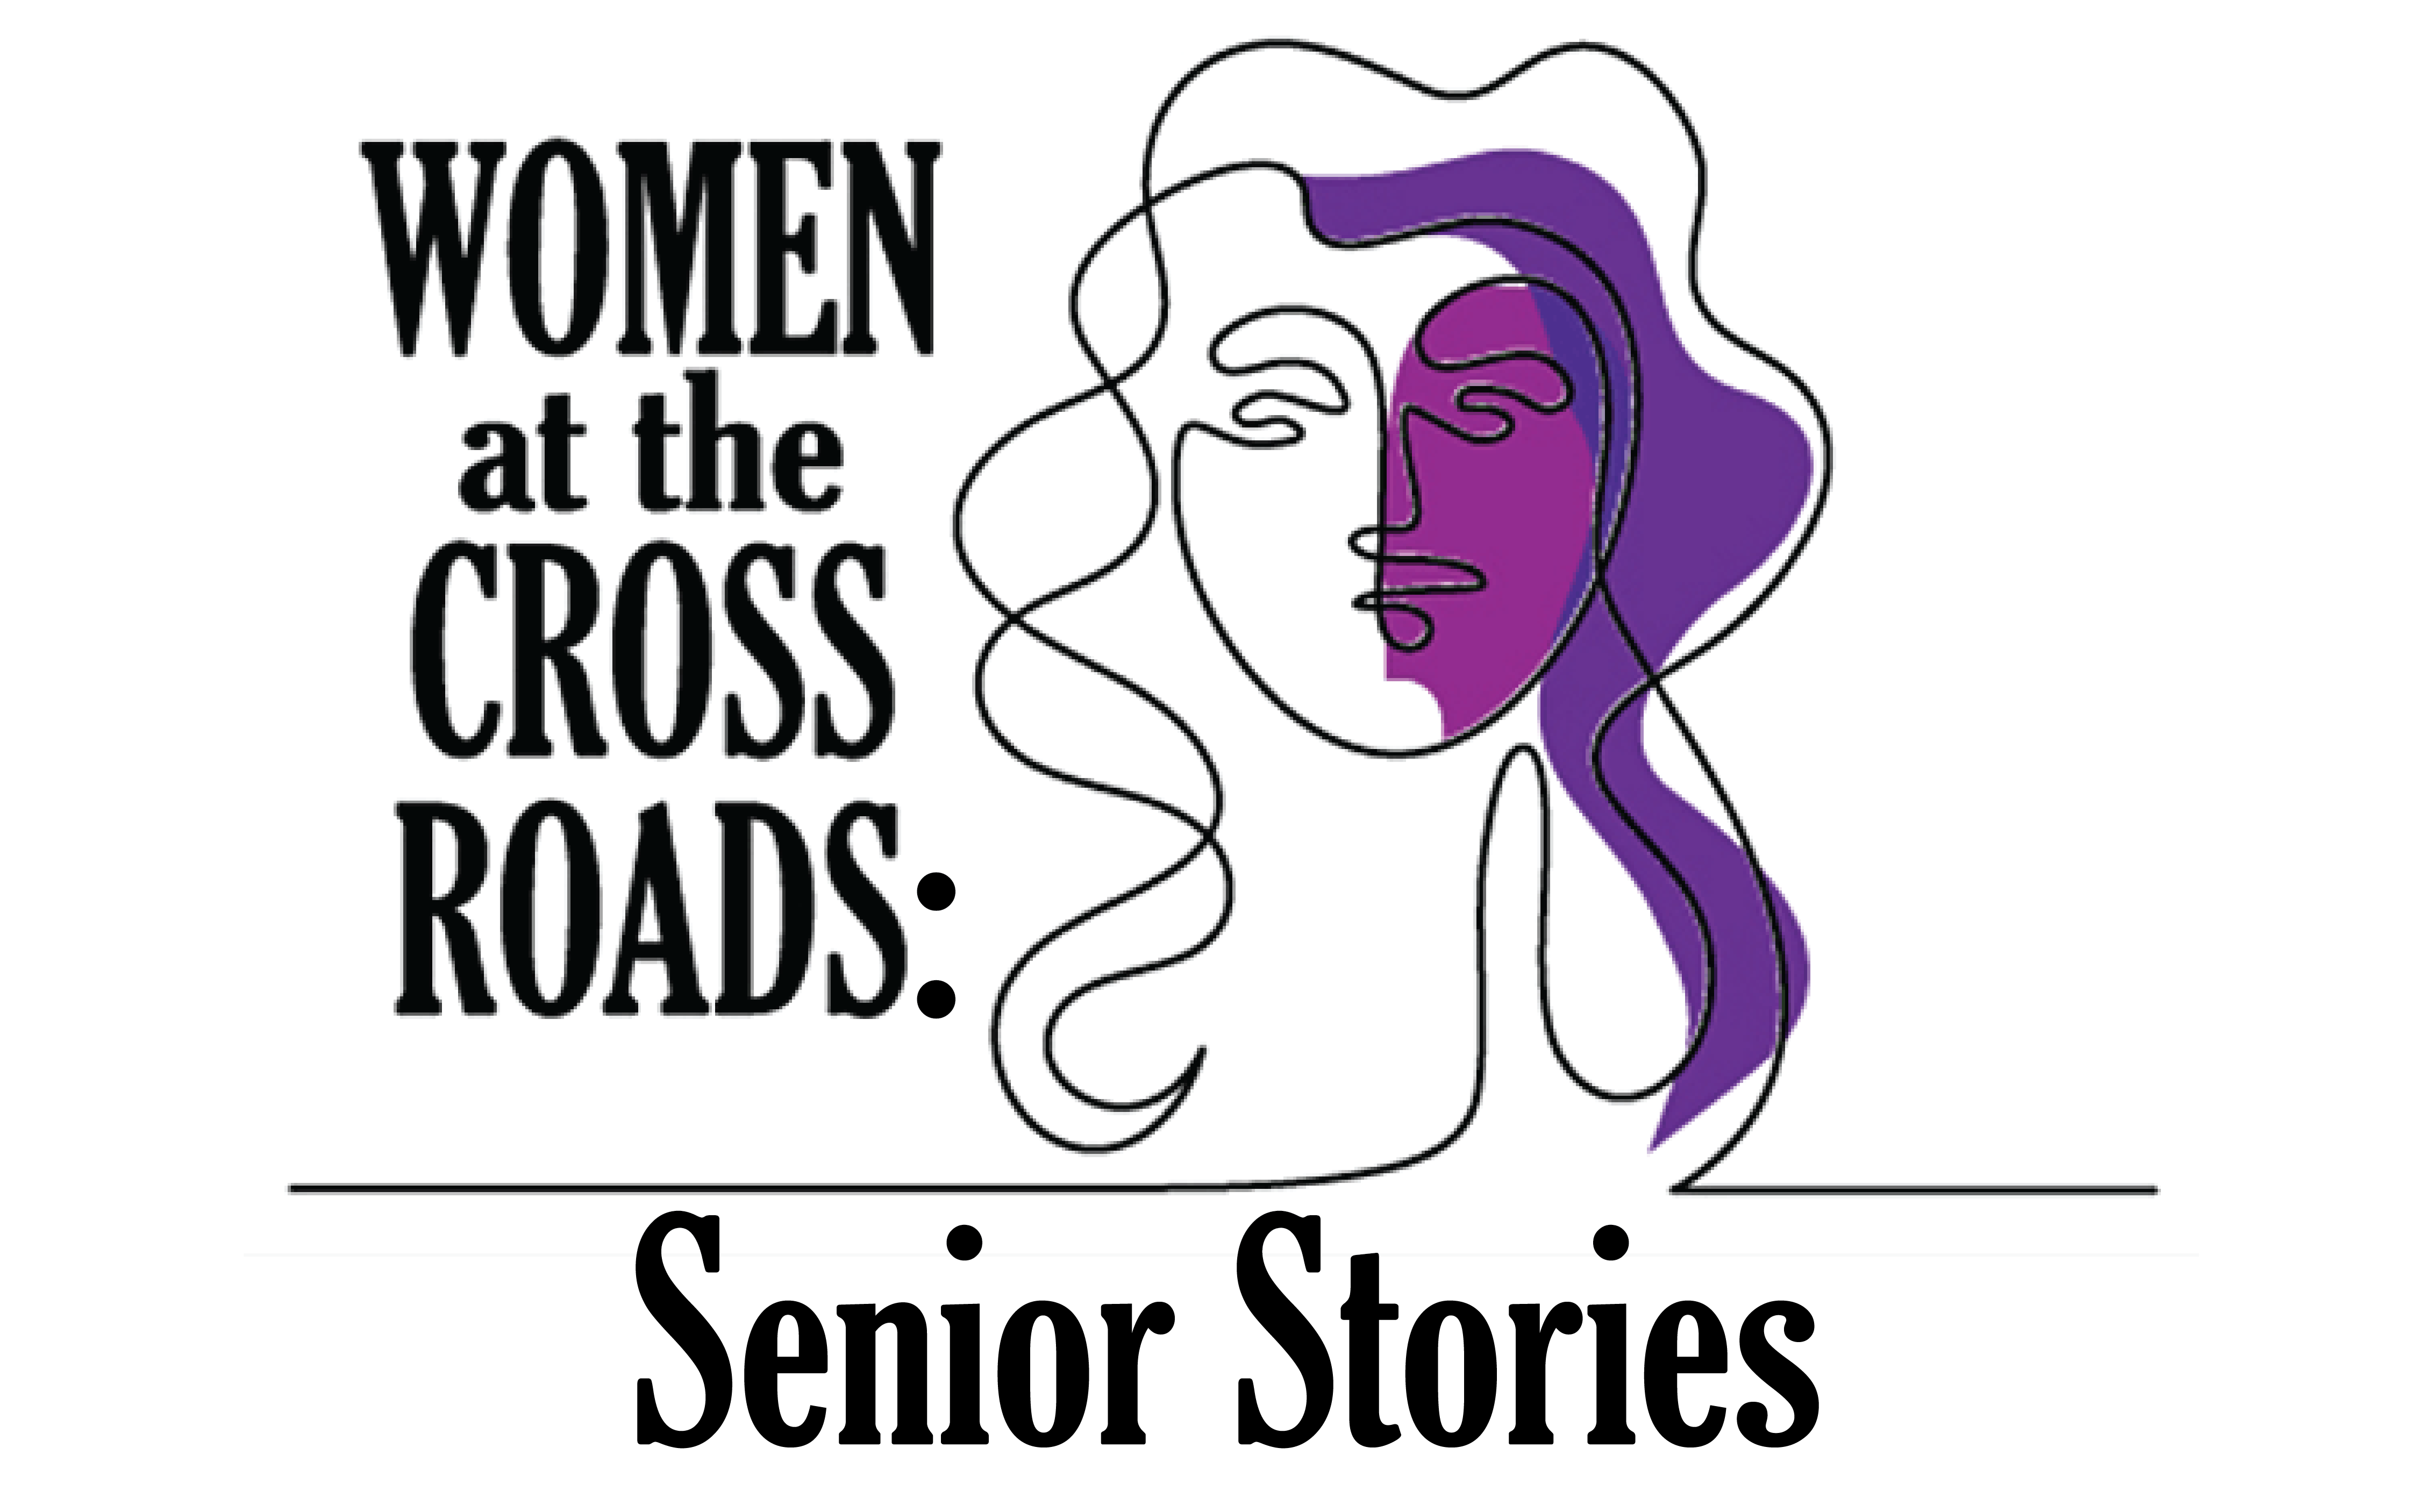 Women at the Cross Roads: Senior Stories